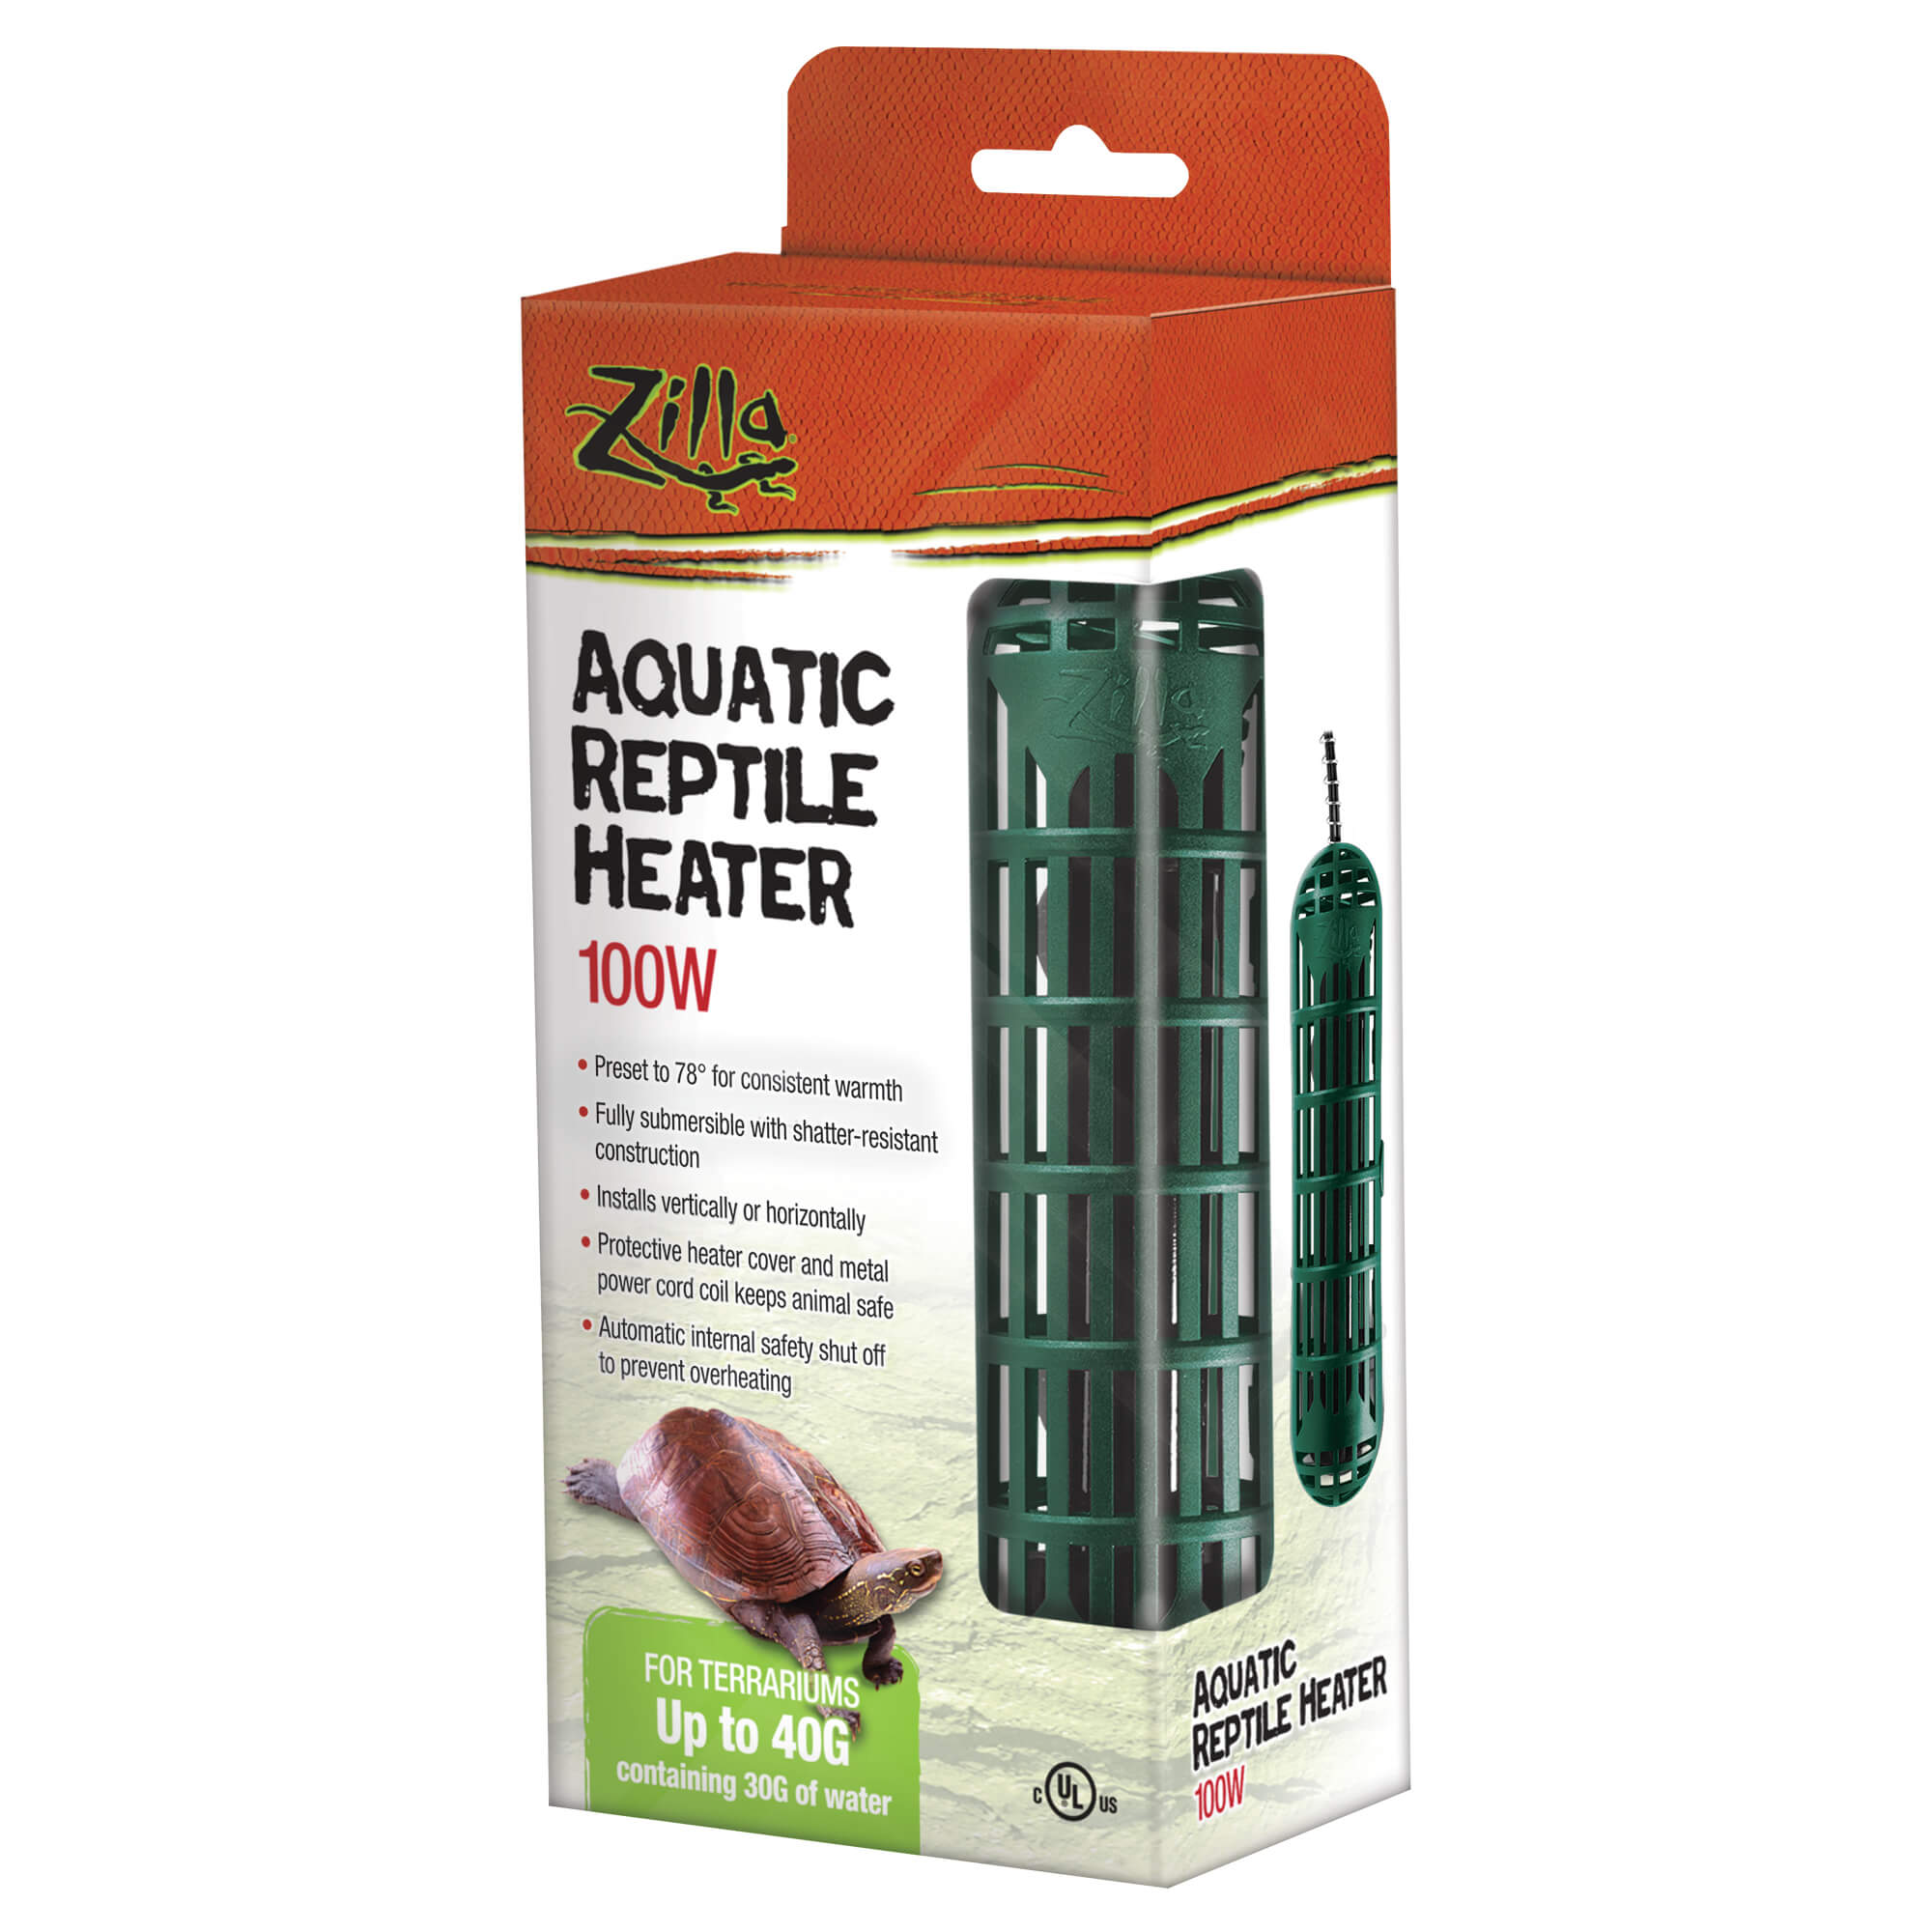 Zilla Aquatic Reptile Heater 100W